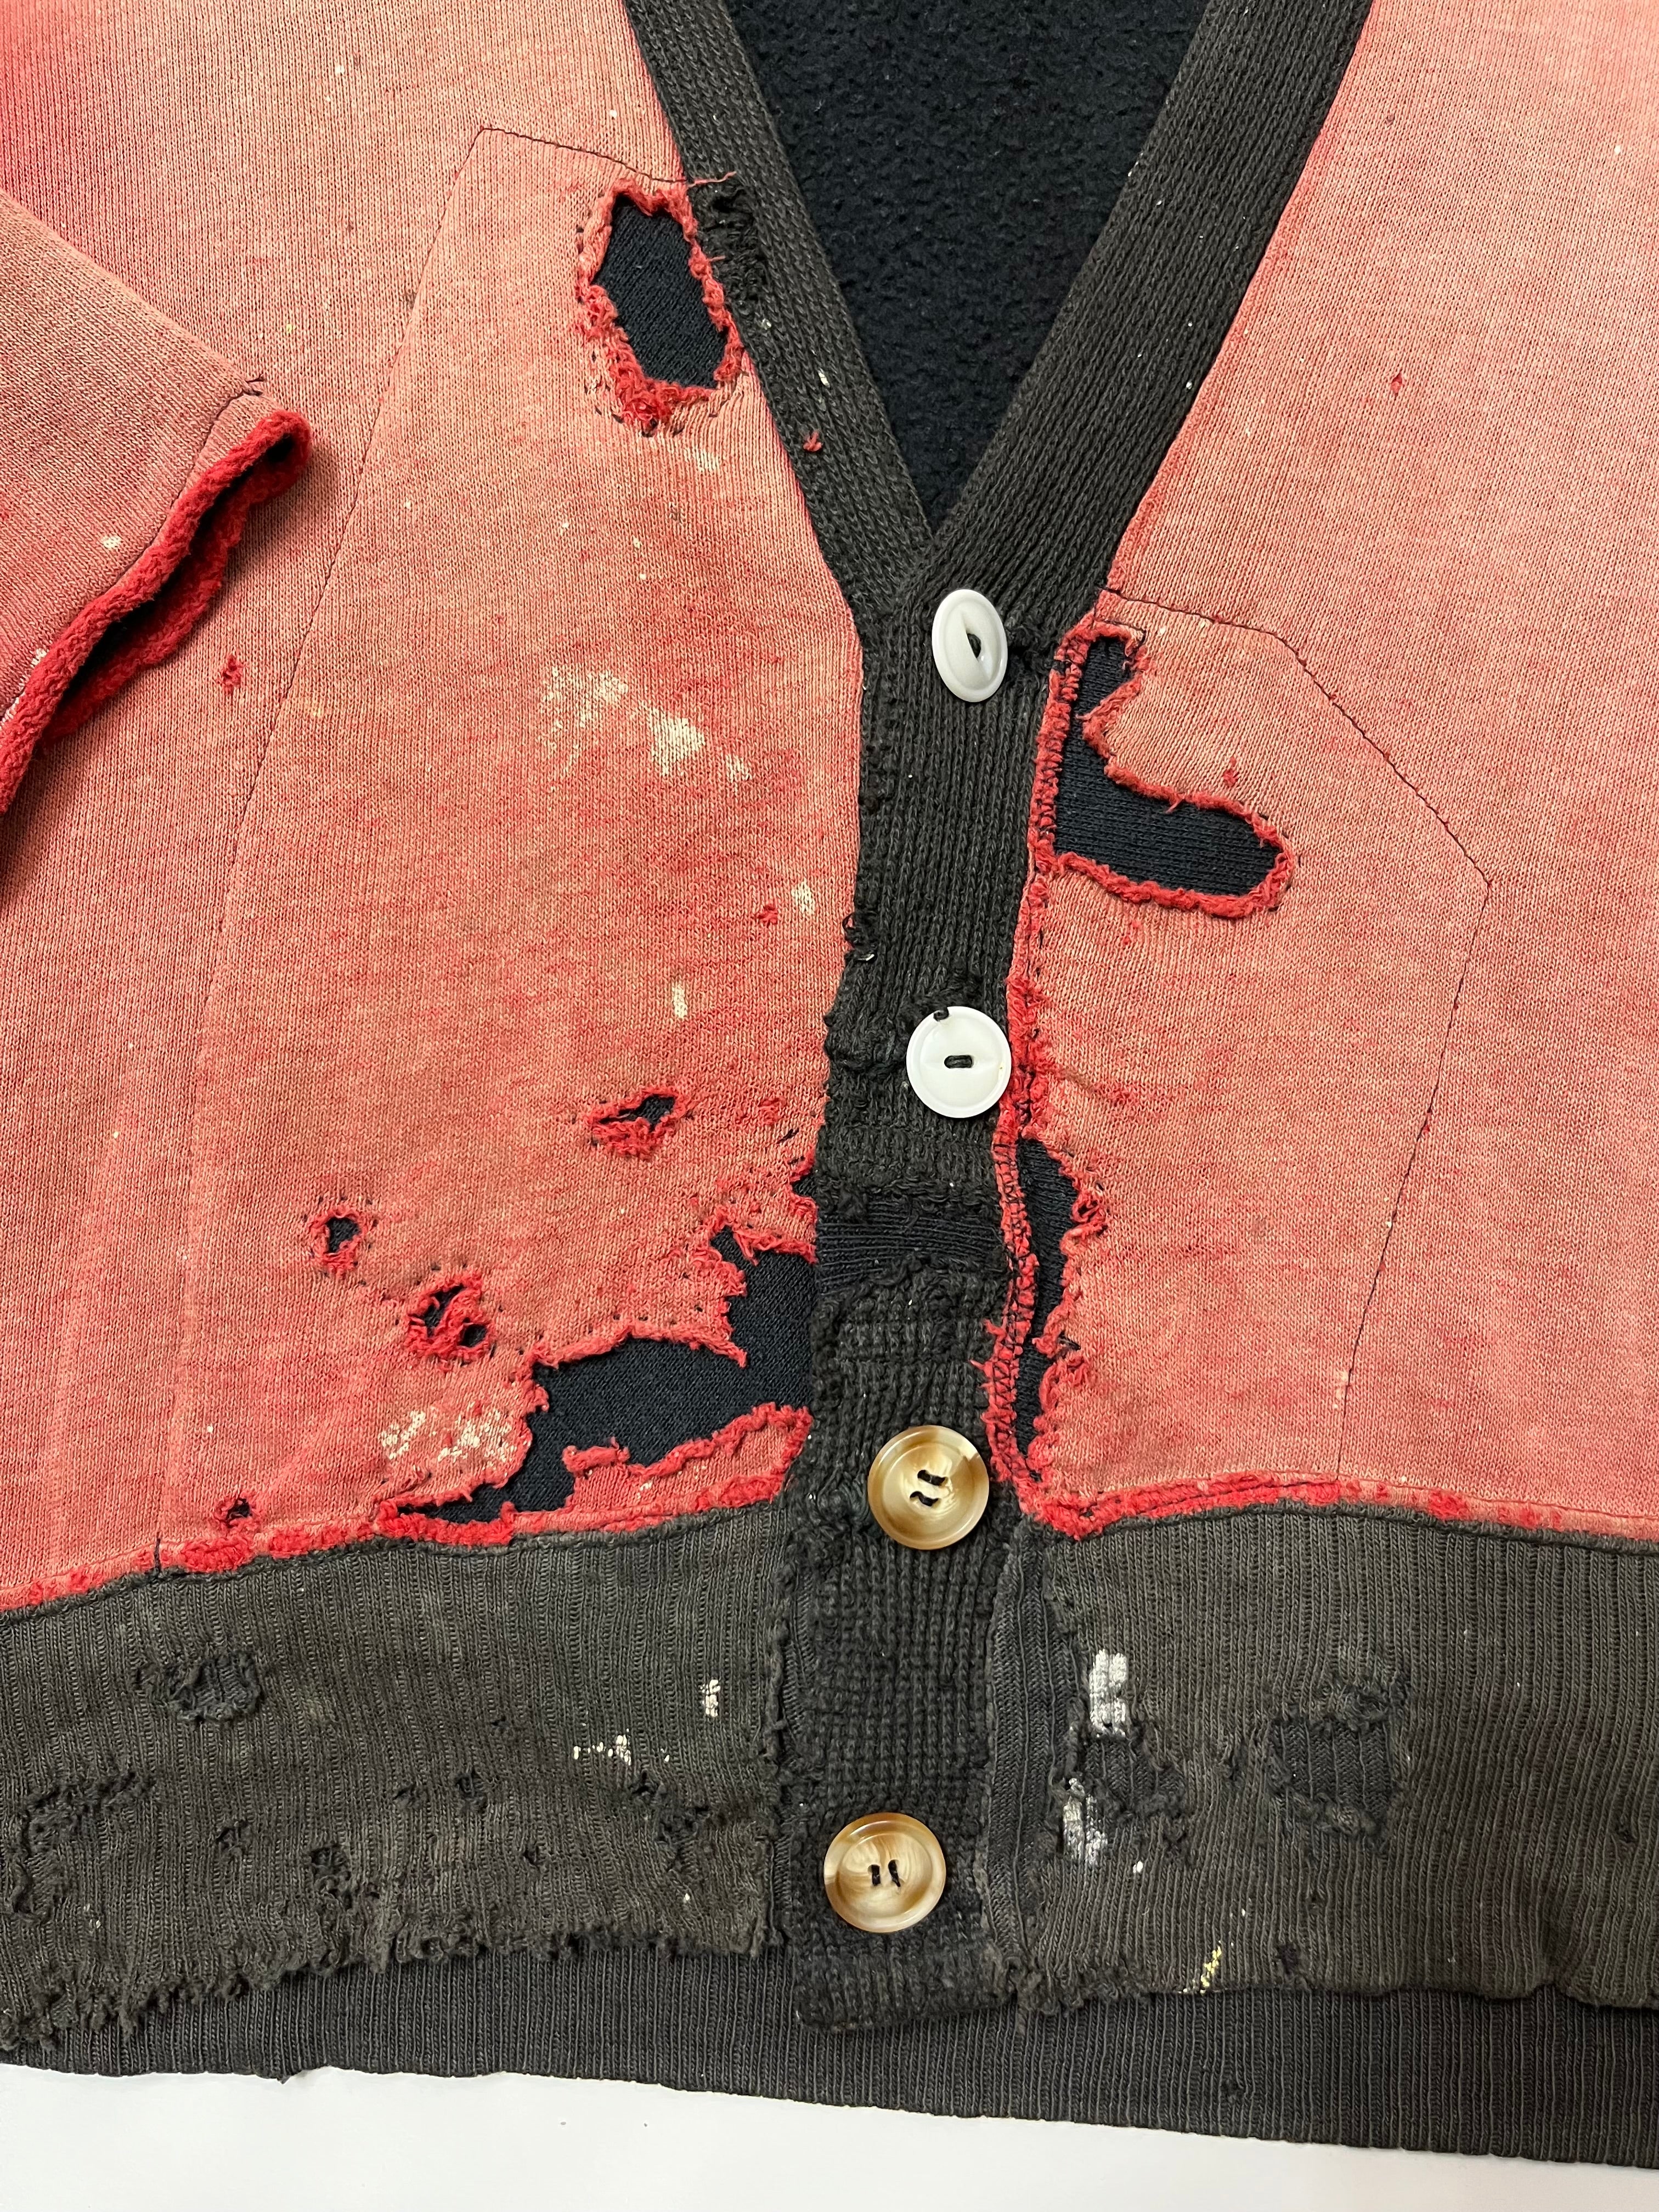 1940s Thrashed Two-Tone Sweatshirt Cardigan - Faded Red/Black - S